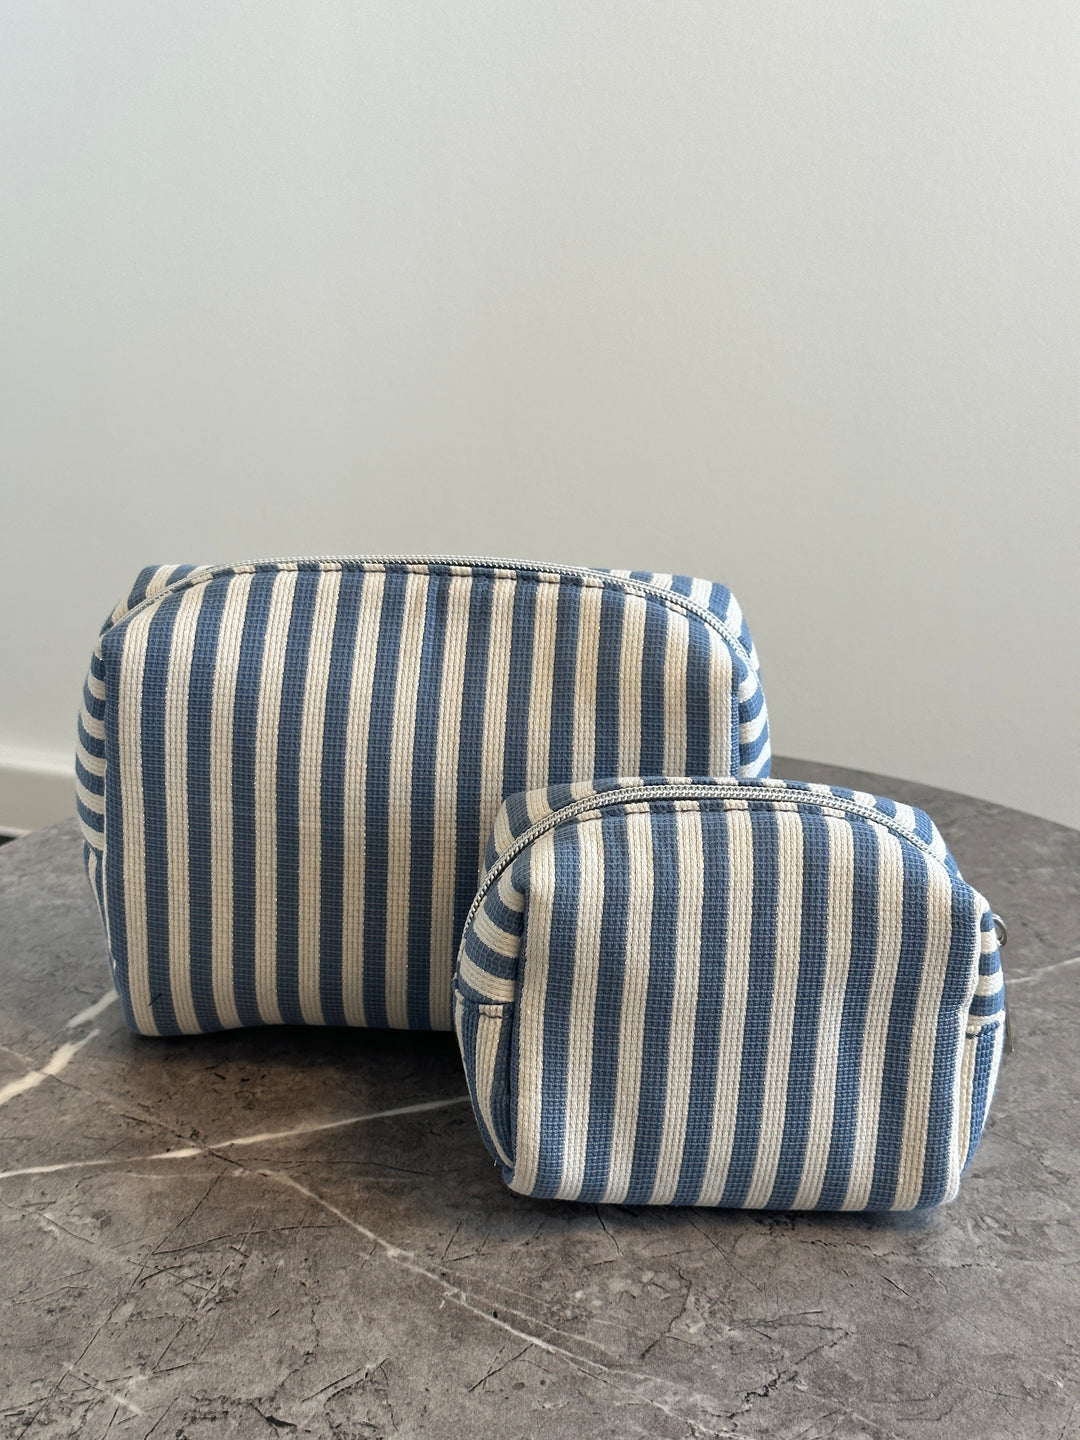 Tea Makeup Bag - Blue Glitter Stripes